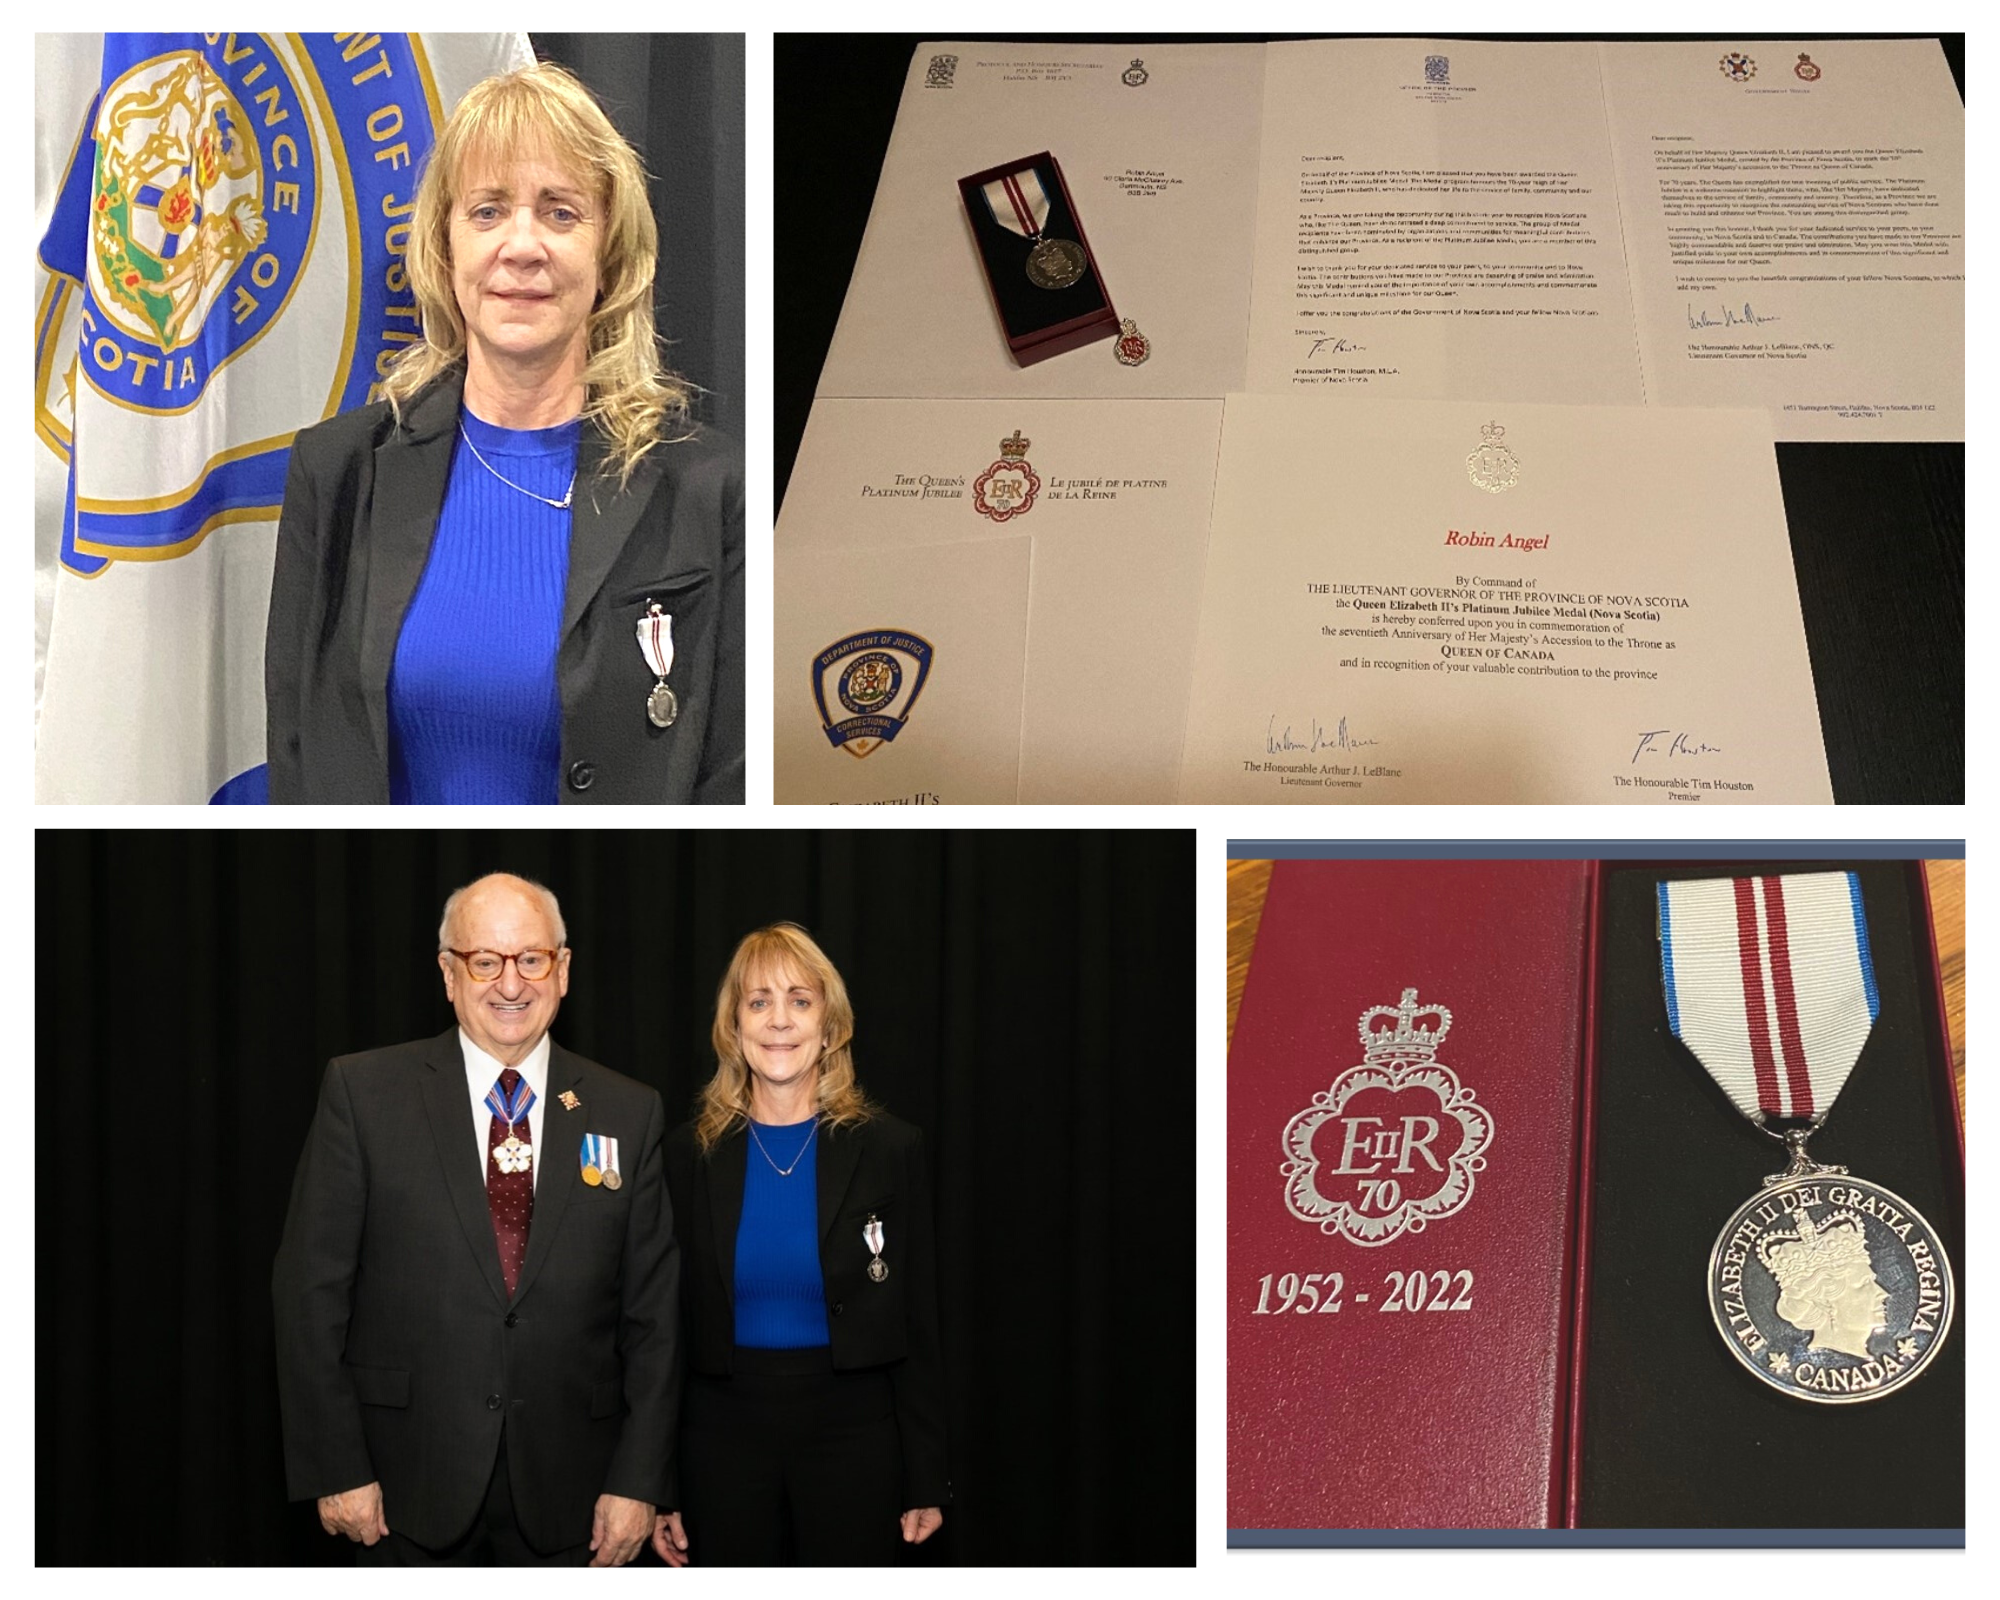 Robin Angel CRSP Photo Collage Receiving Queen's Jubilee Medal Nova Scotia